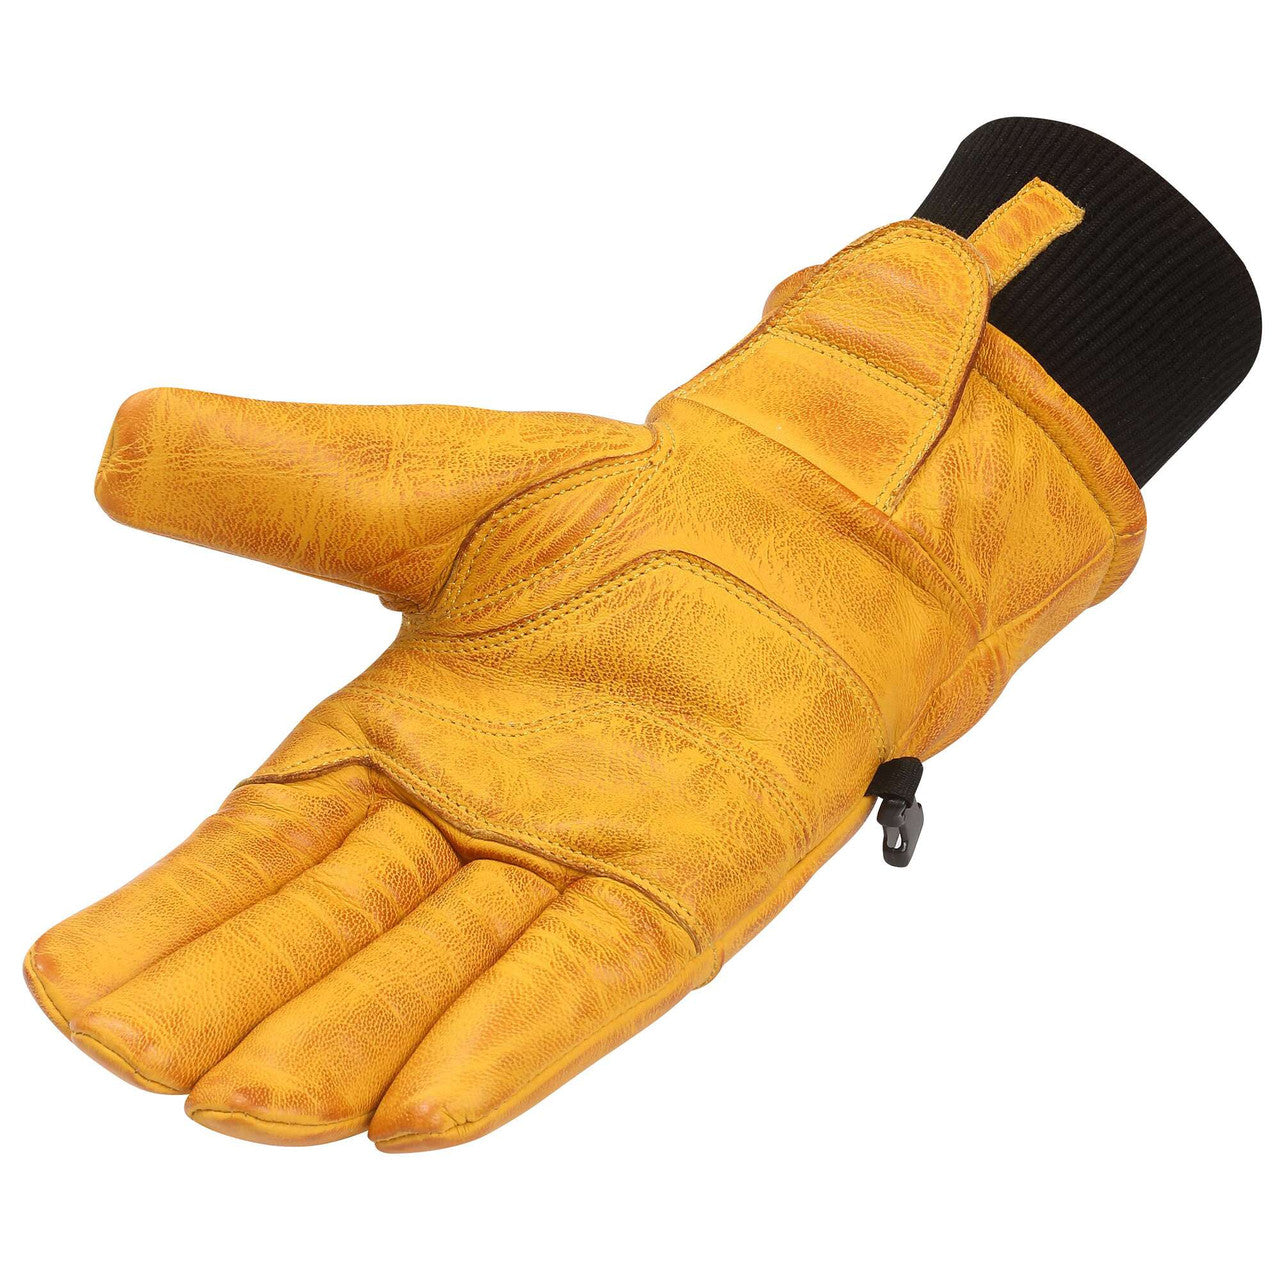 Vance-Snow-Tan-Gloves-palm-side-angle